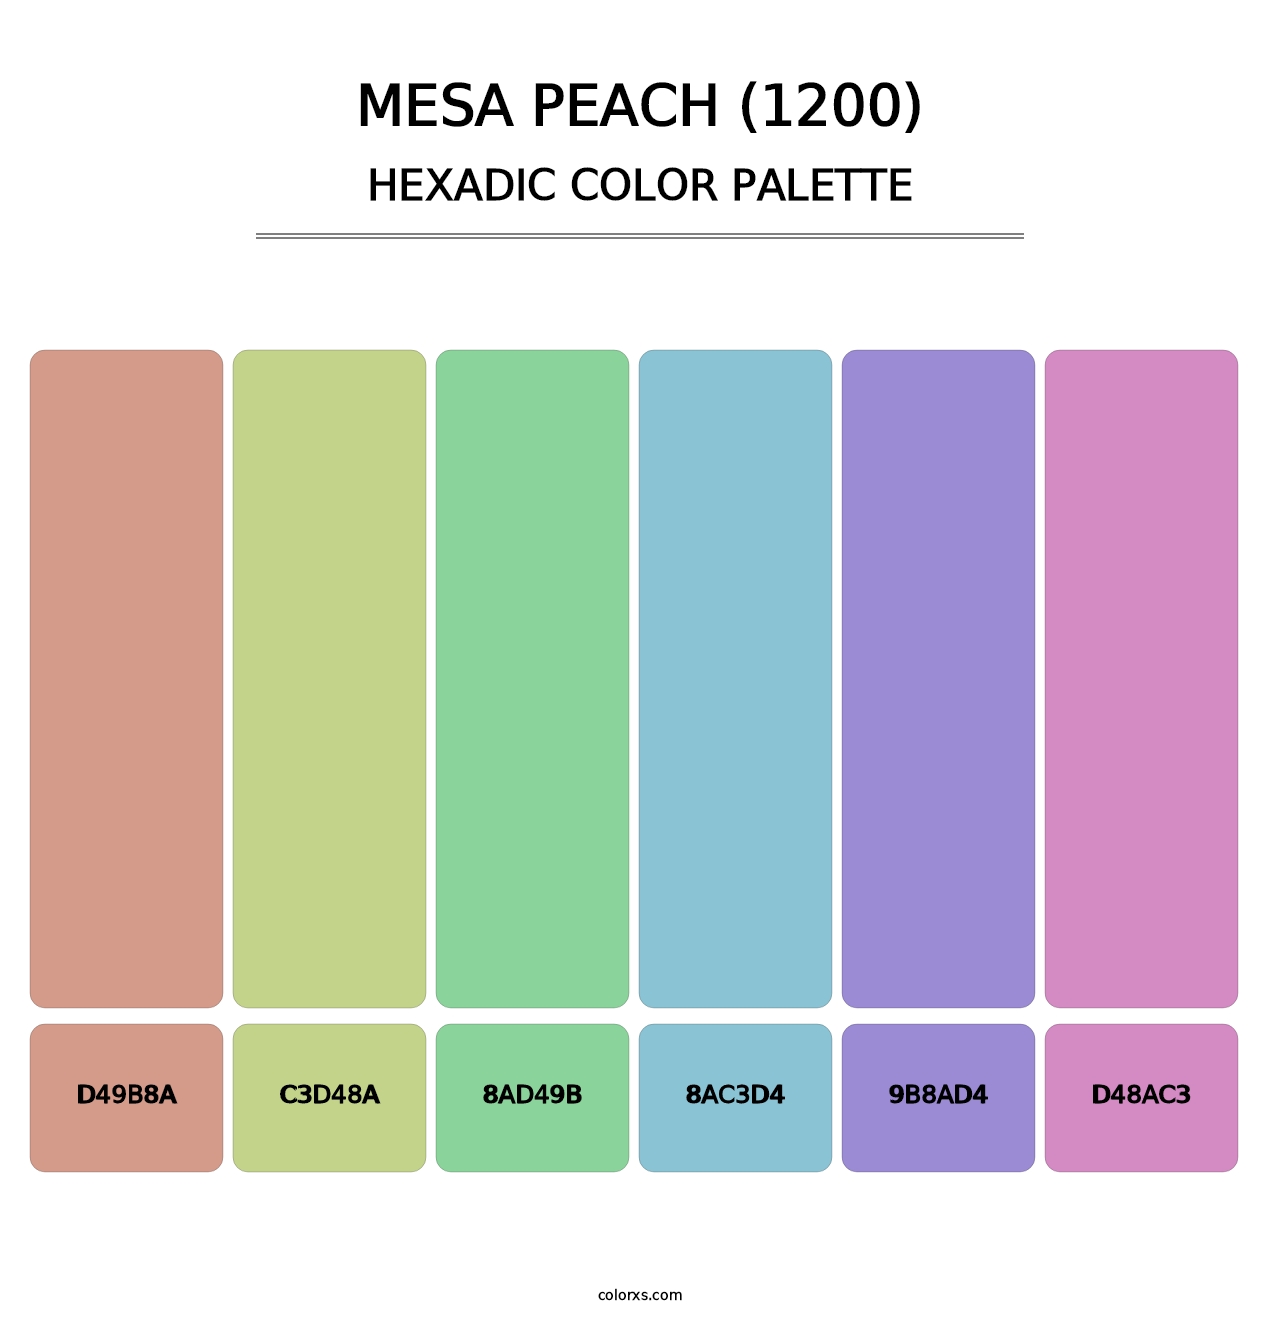 Mesa Peach (1200) - Hexadic Color Palette